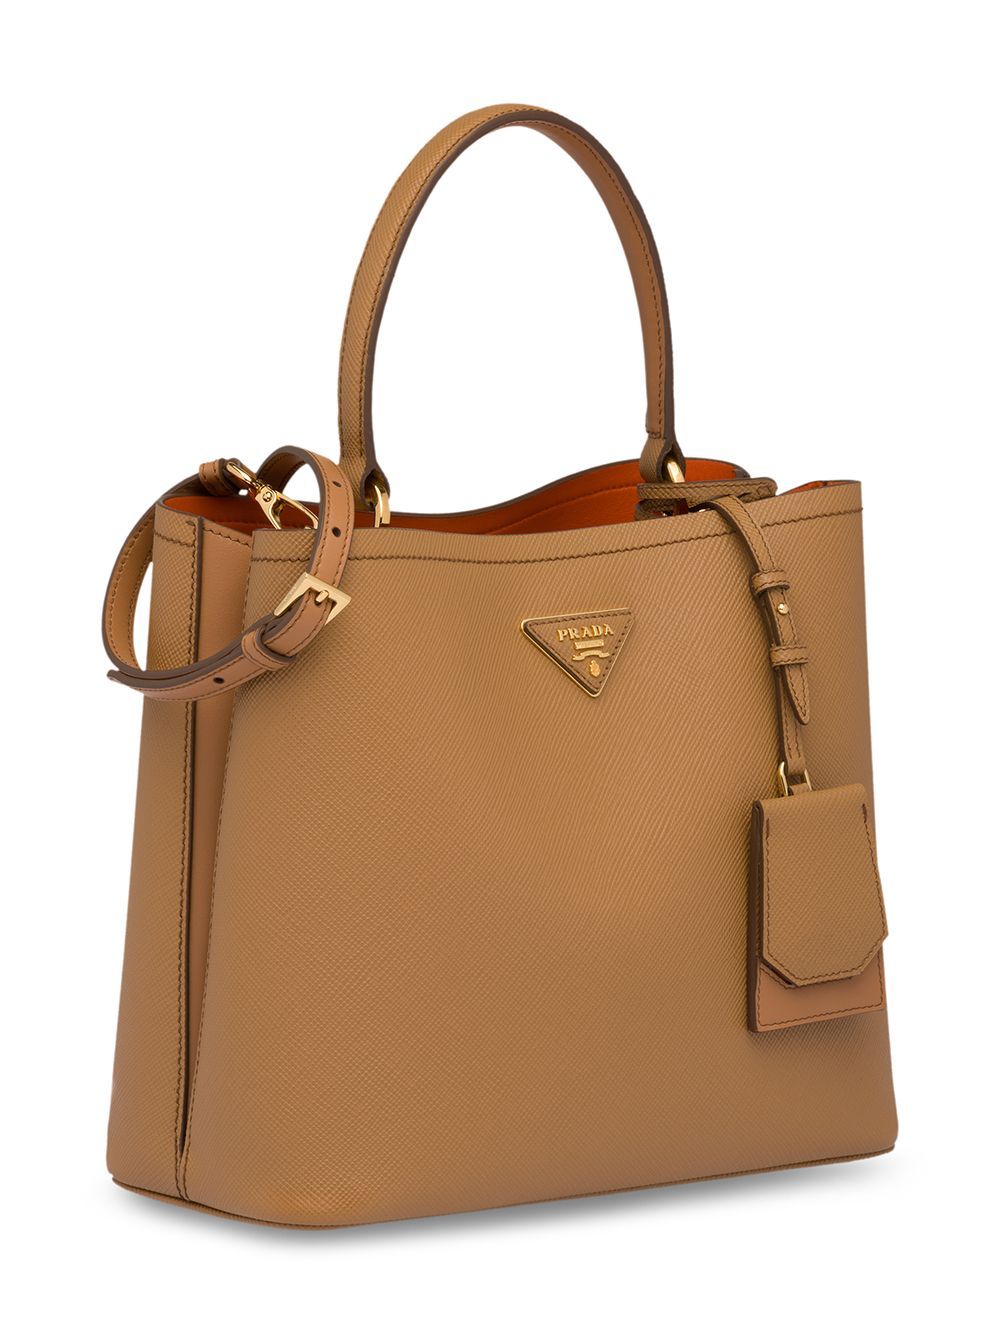 PradaDouble Saffiano leather bag | FarFetch Global